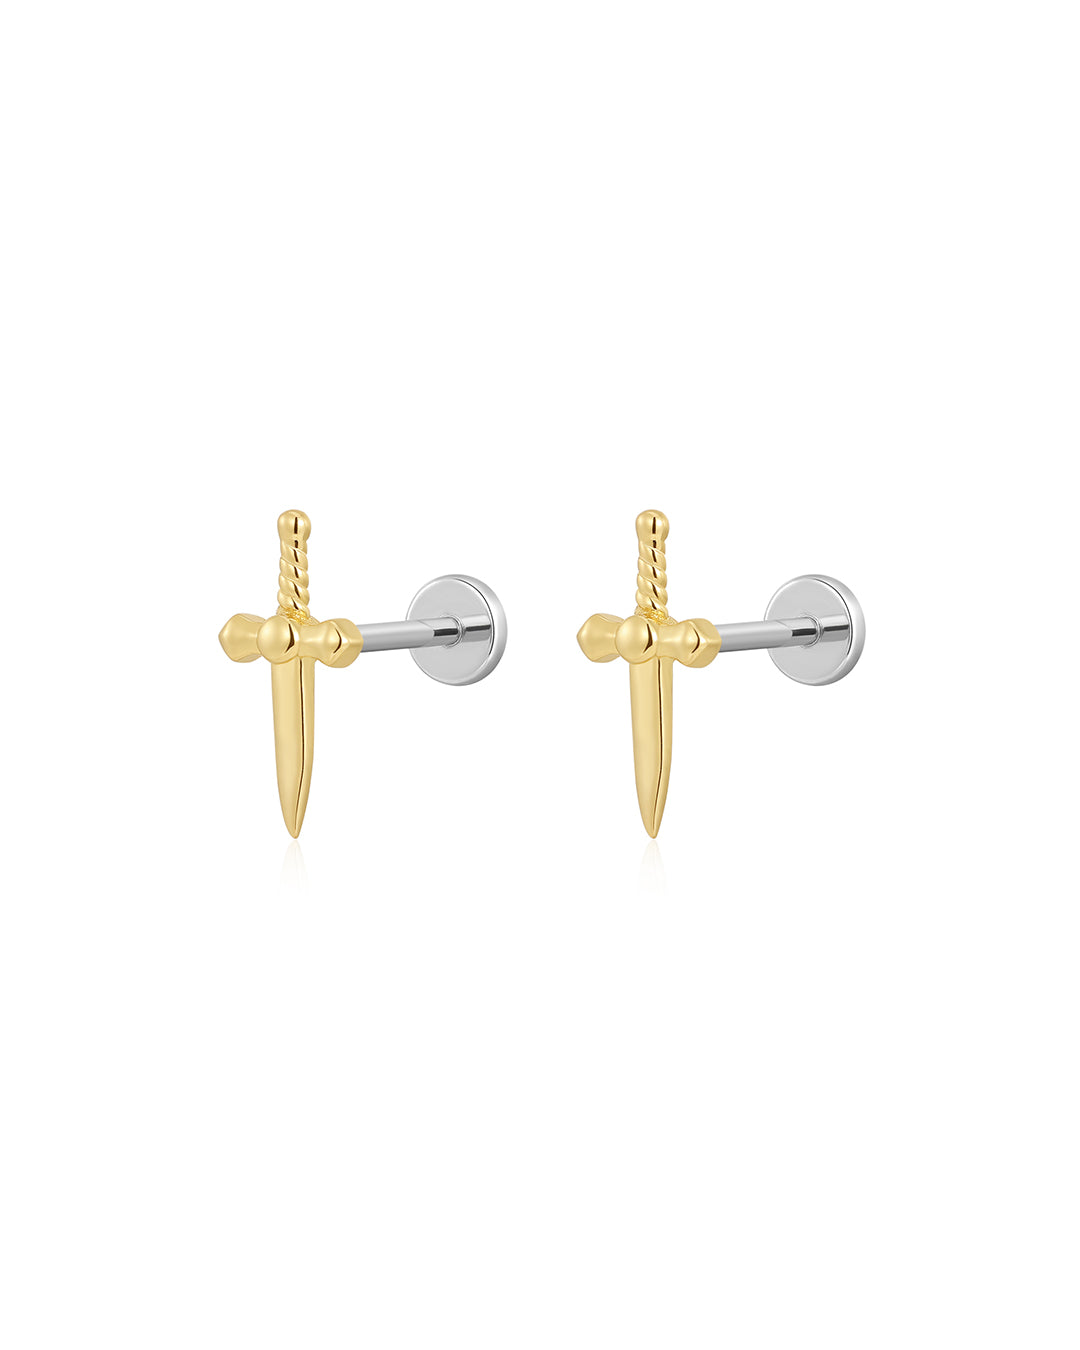 Luv Aj Dagger Flat Back Stud Earrings in Polished 14k Gold Plated